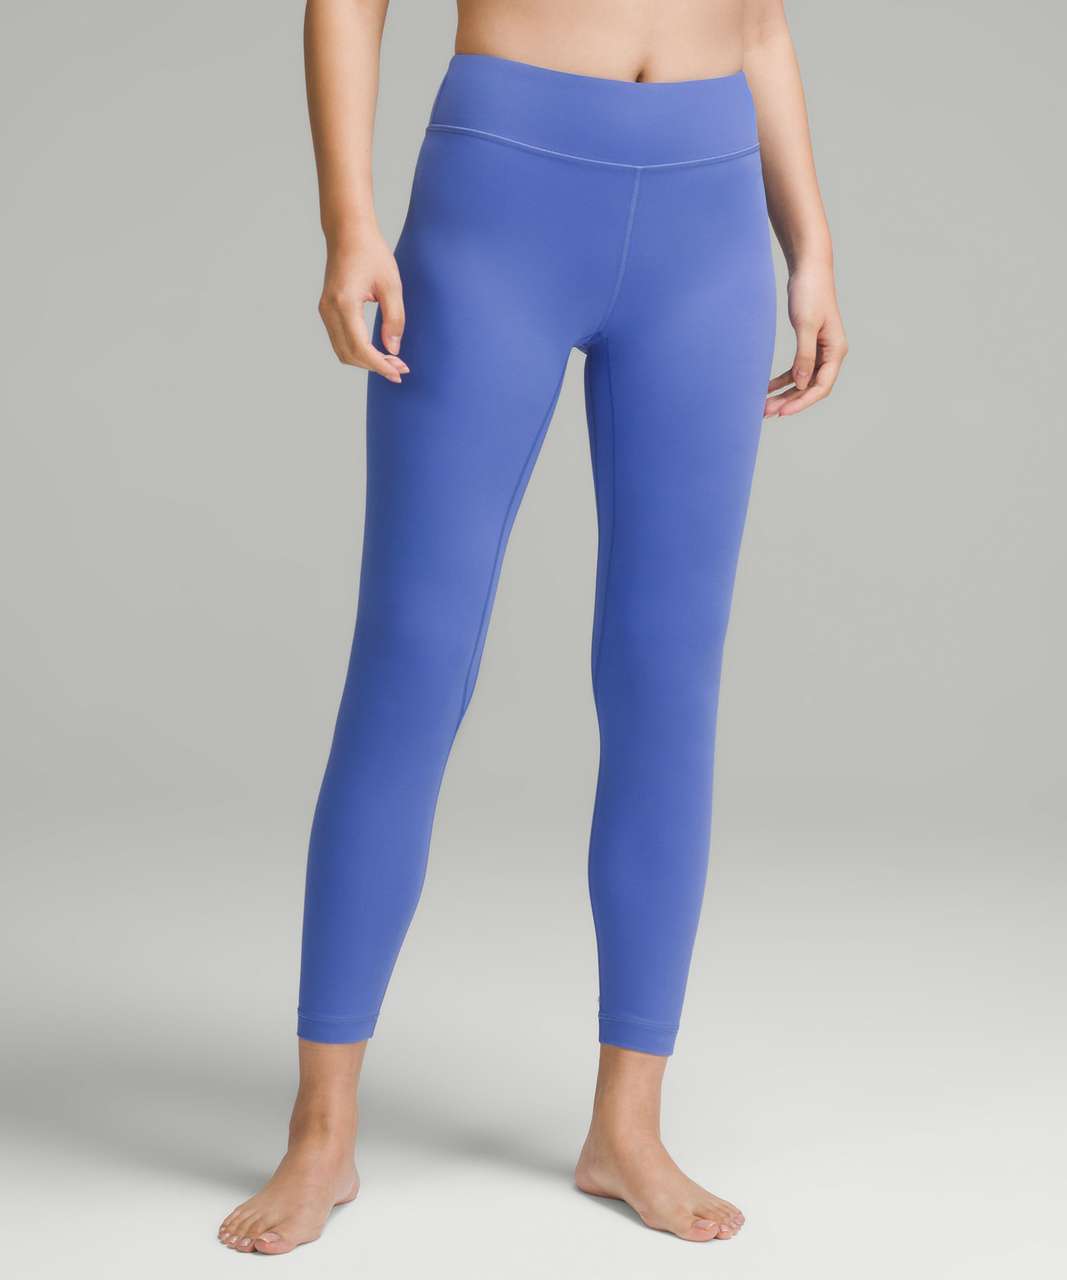 Buy the Lululemon Women's Align Pant Indigo Straight Pants Size 12